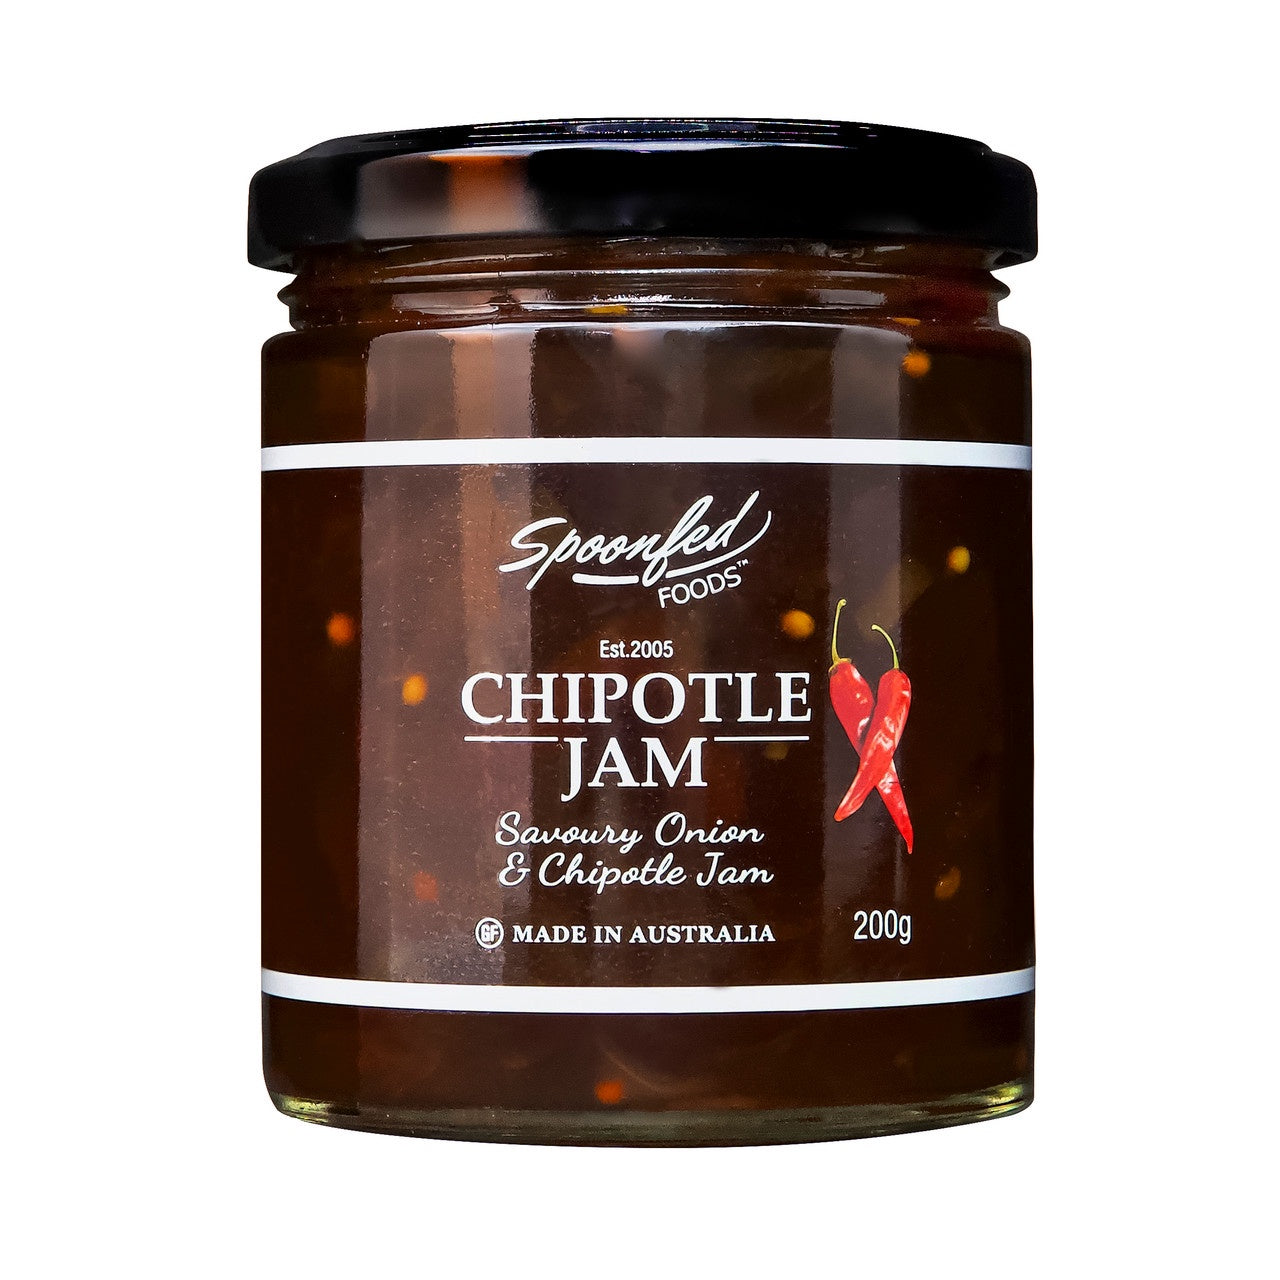 Spoonfed Foods Chipotle Jam 200g